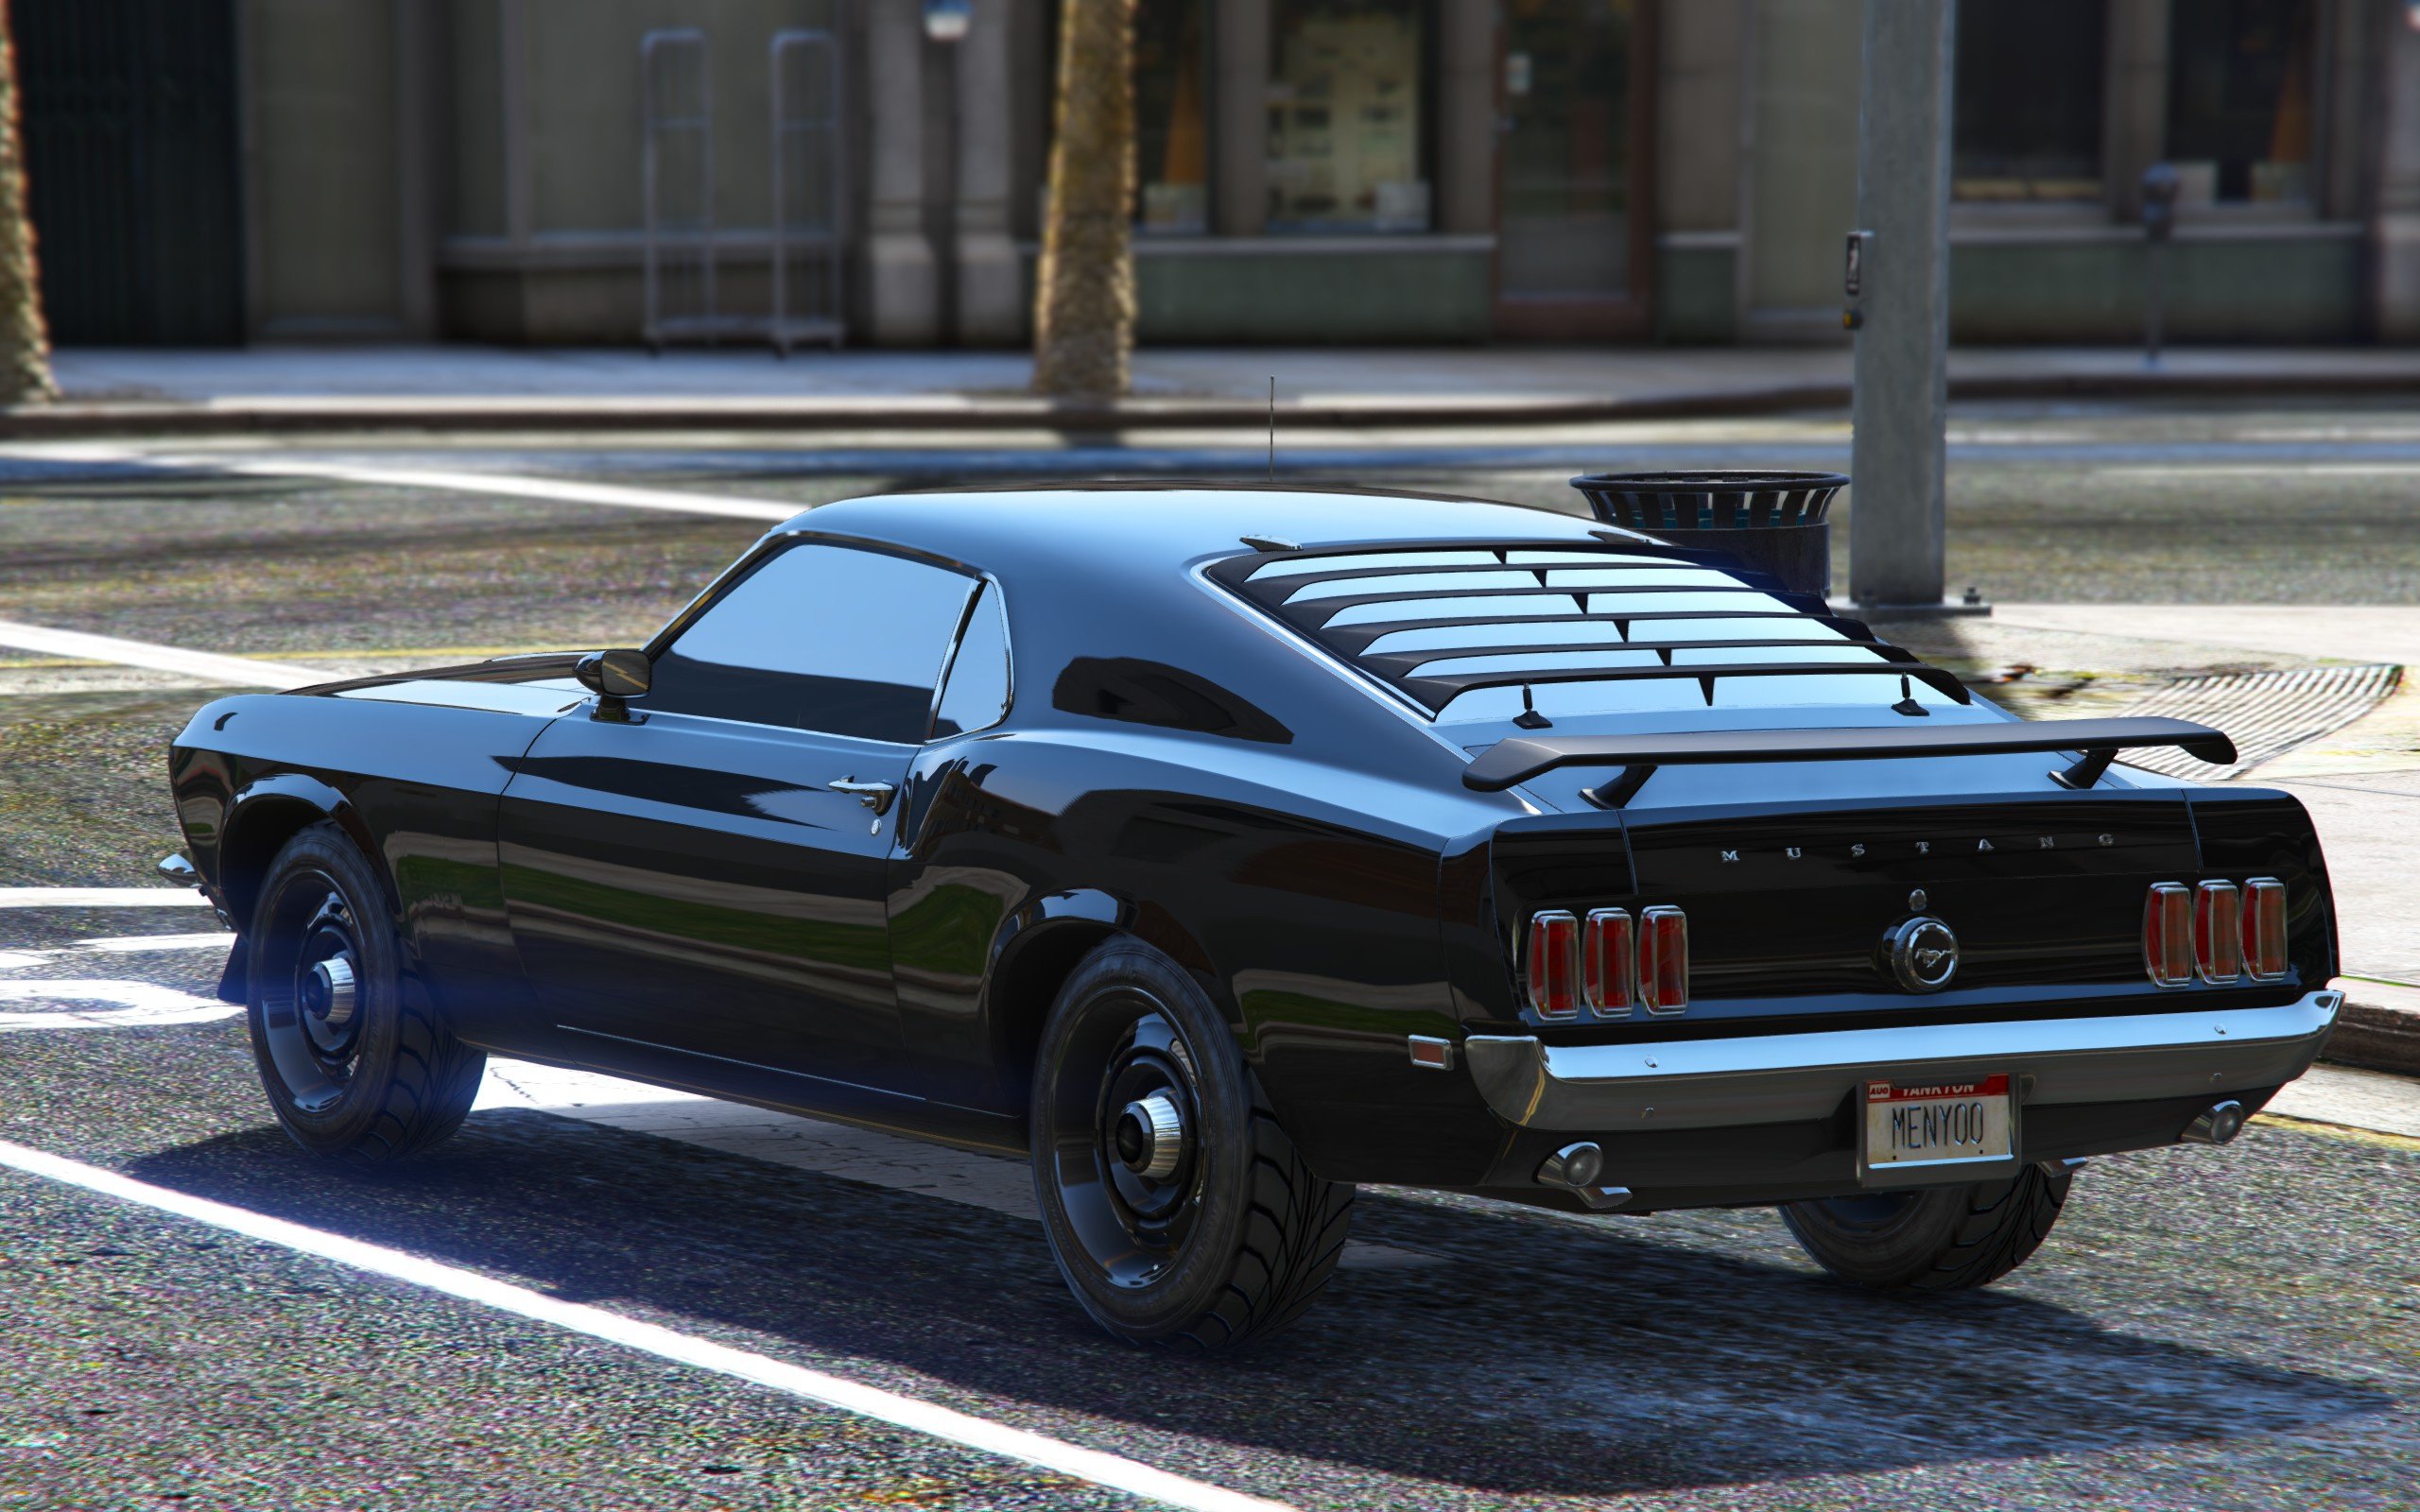 1968 Ford Mustang | eBay